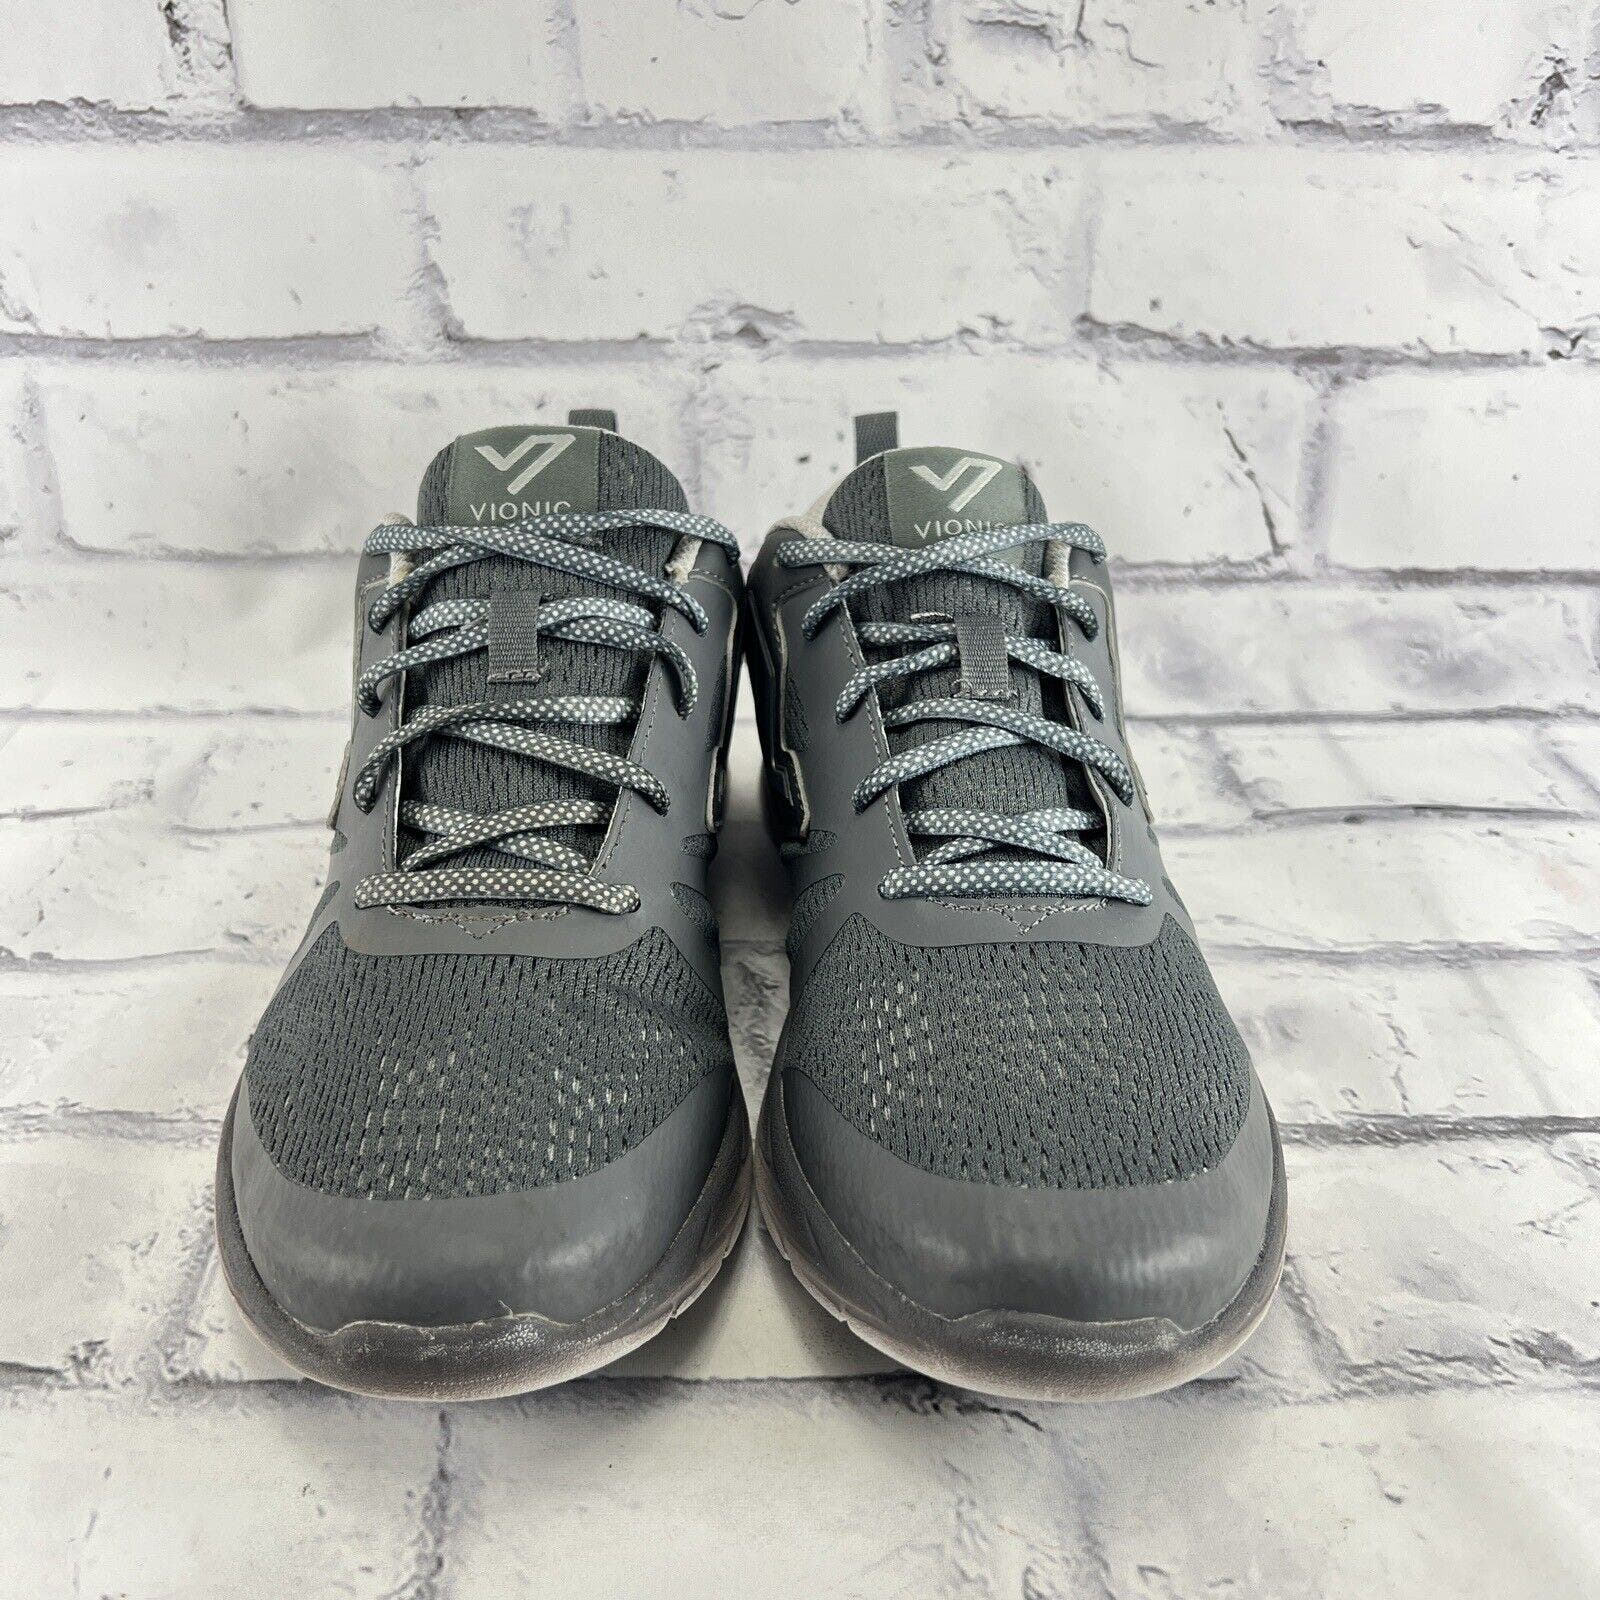 Vionic 365 Miles Sneakers Women’s Size 10 Active Athletic Gray Comfort Shoe